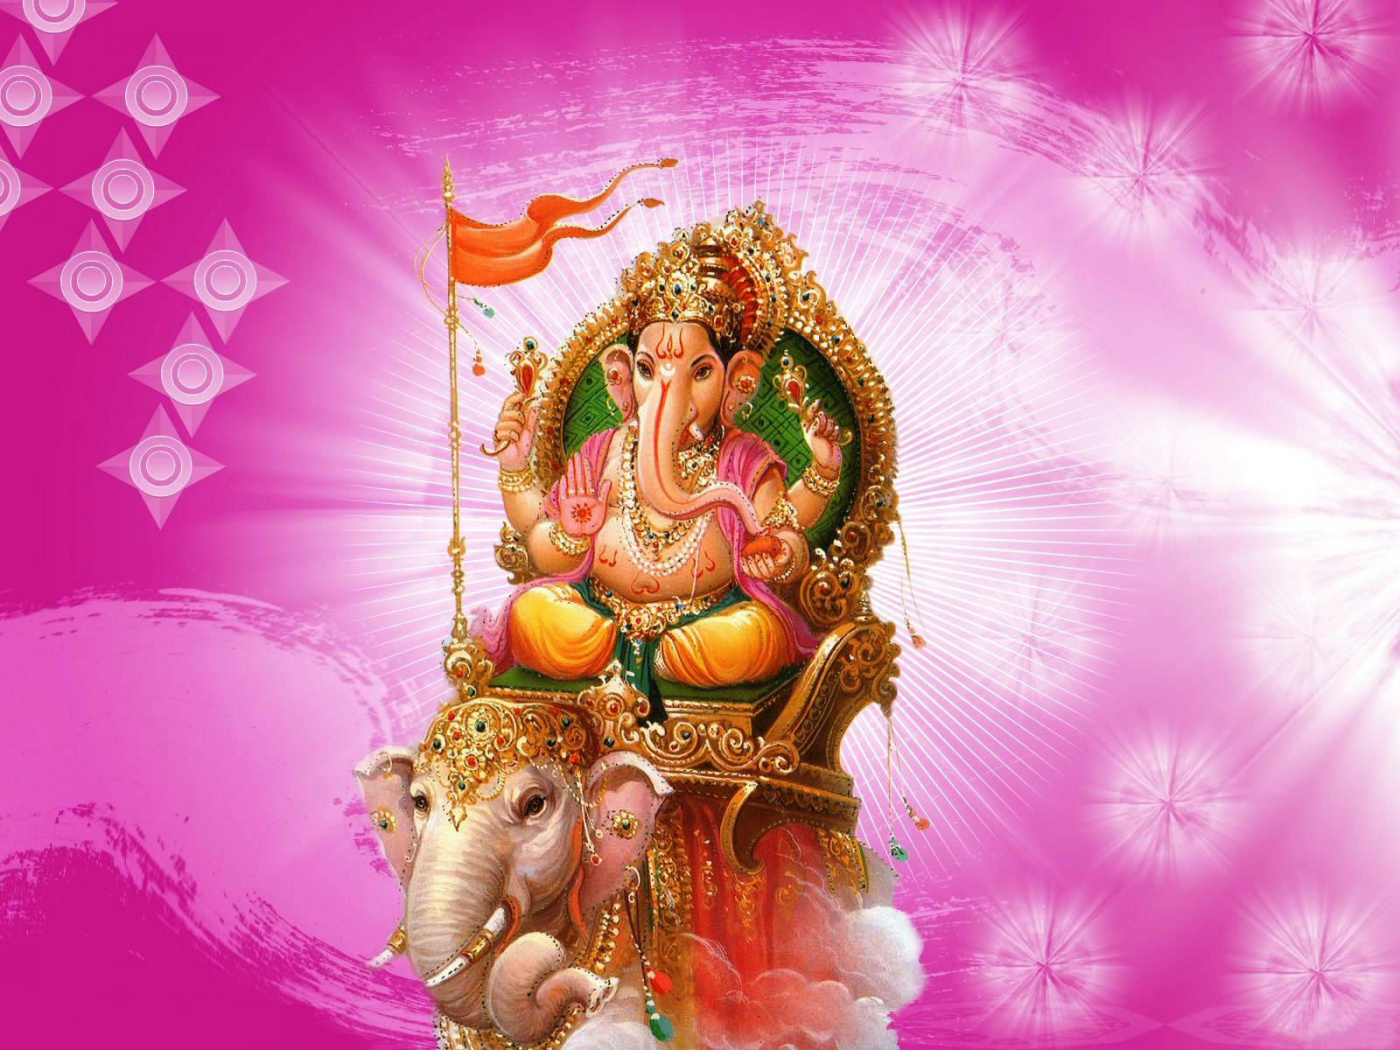 Ganapathi On An Elephant - HD Wallpaper 